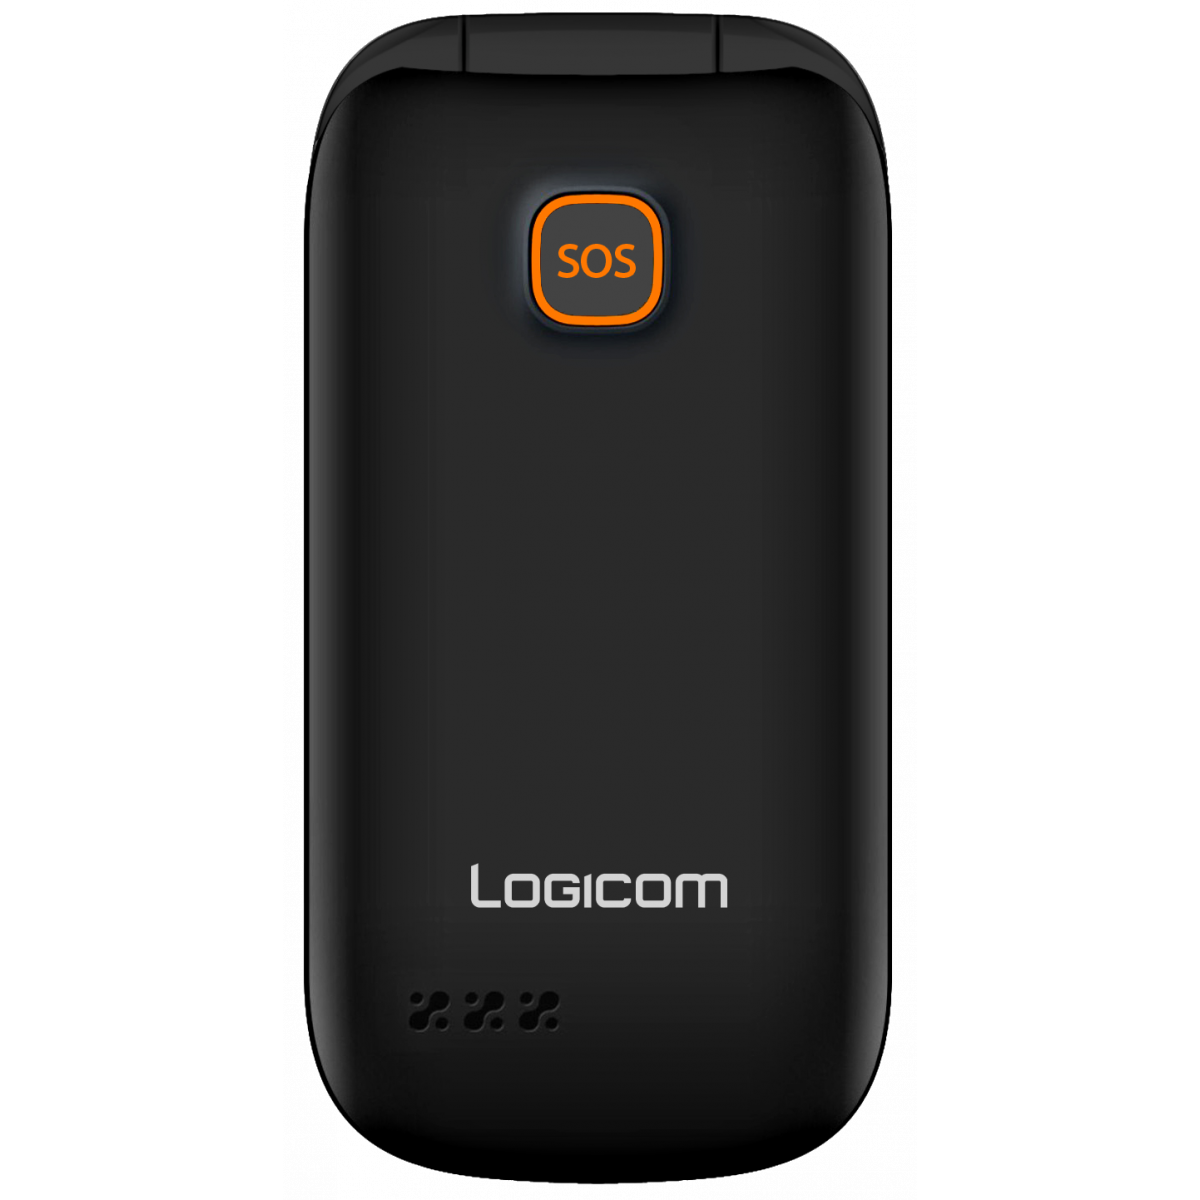 Logicom Le Posh 178 Red - Mobile phone & smartphone - LDLC 3-year warranty